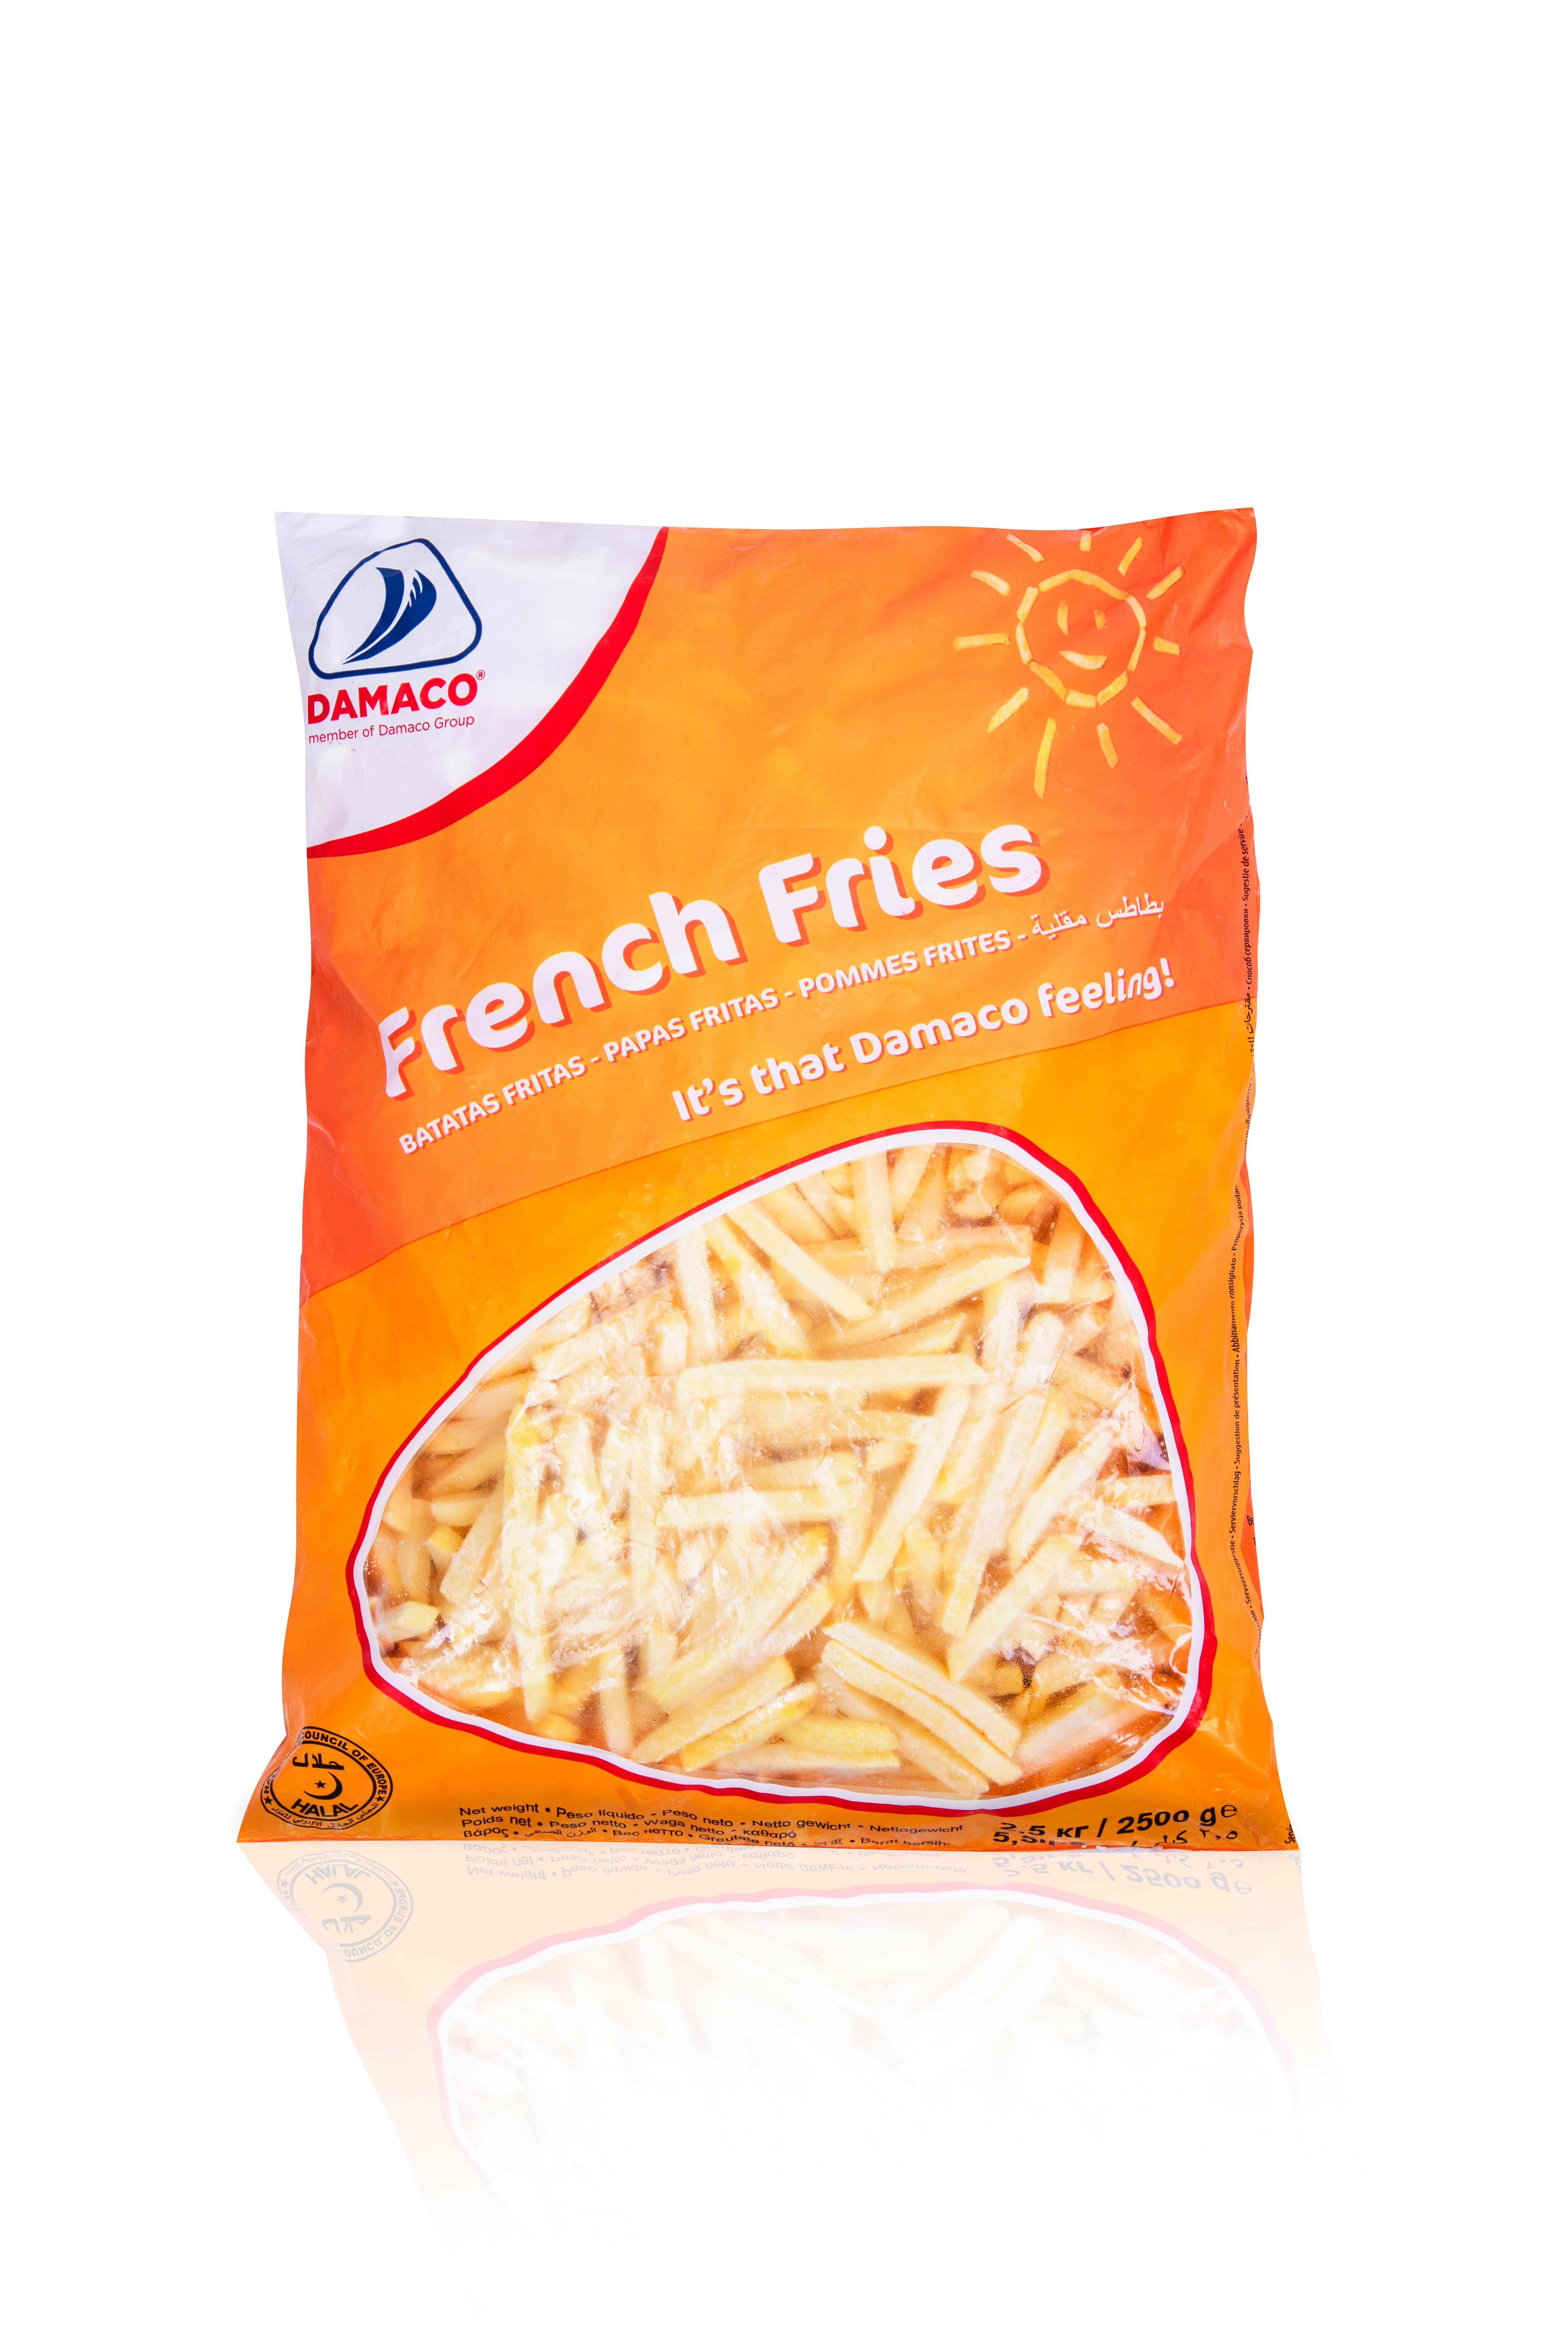 damaco french fries packaging kipco damaco group